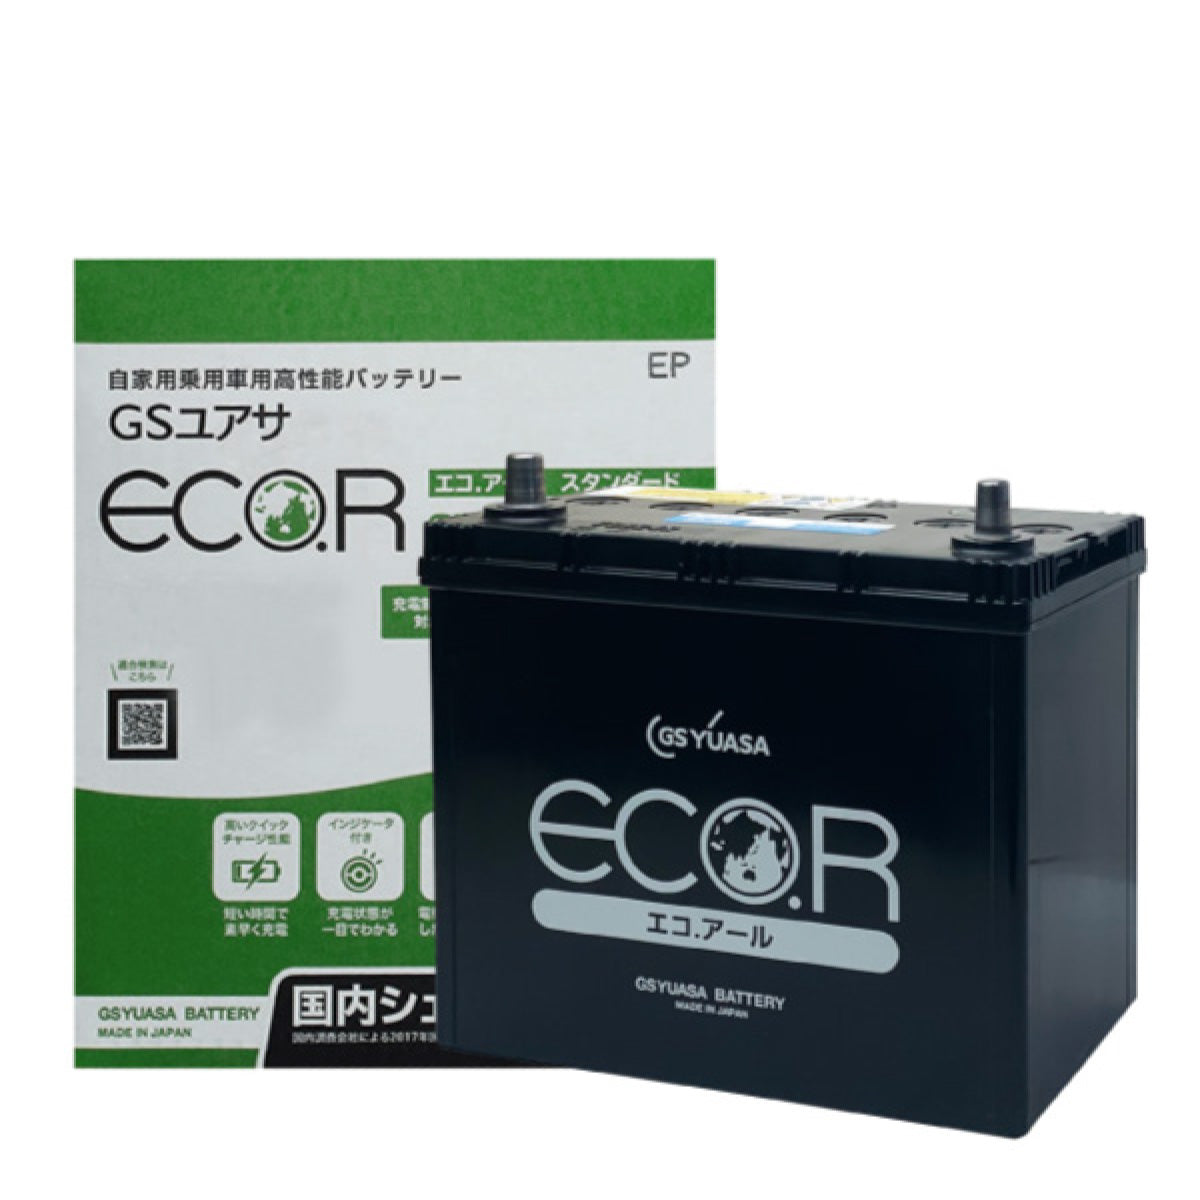 GSユアサ EC 85D26L ST ECO.R国産車バッテリー 充電制御車対応 - パーツ